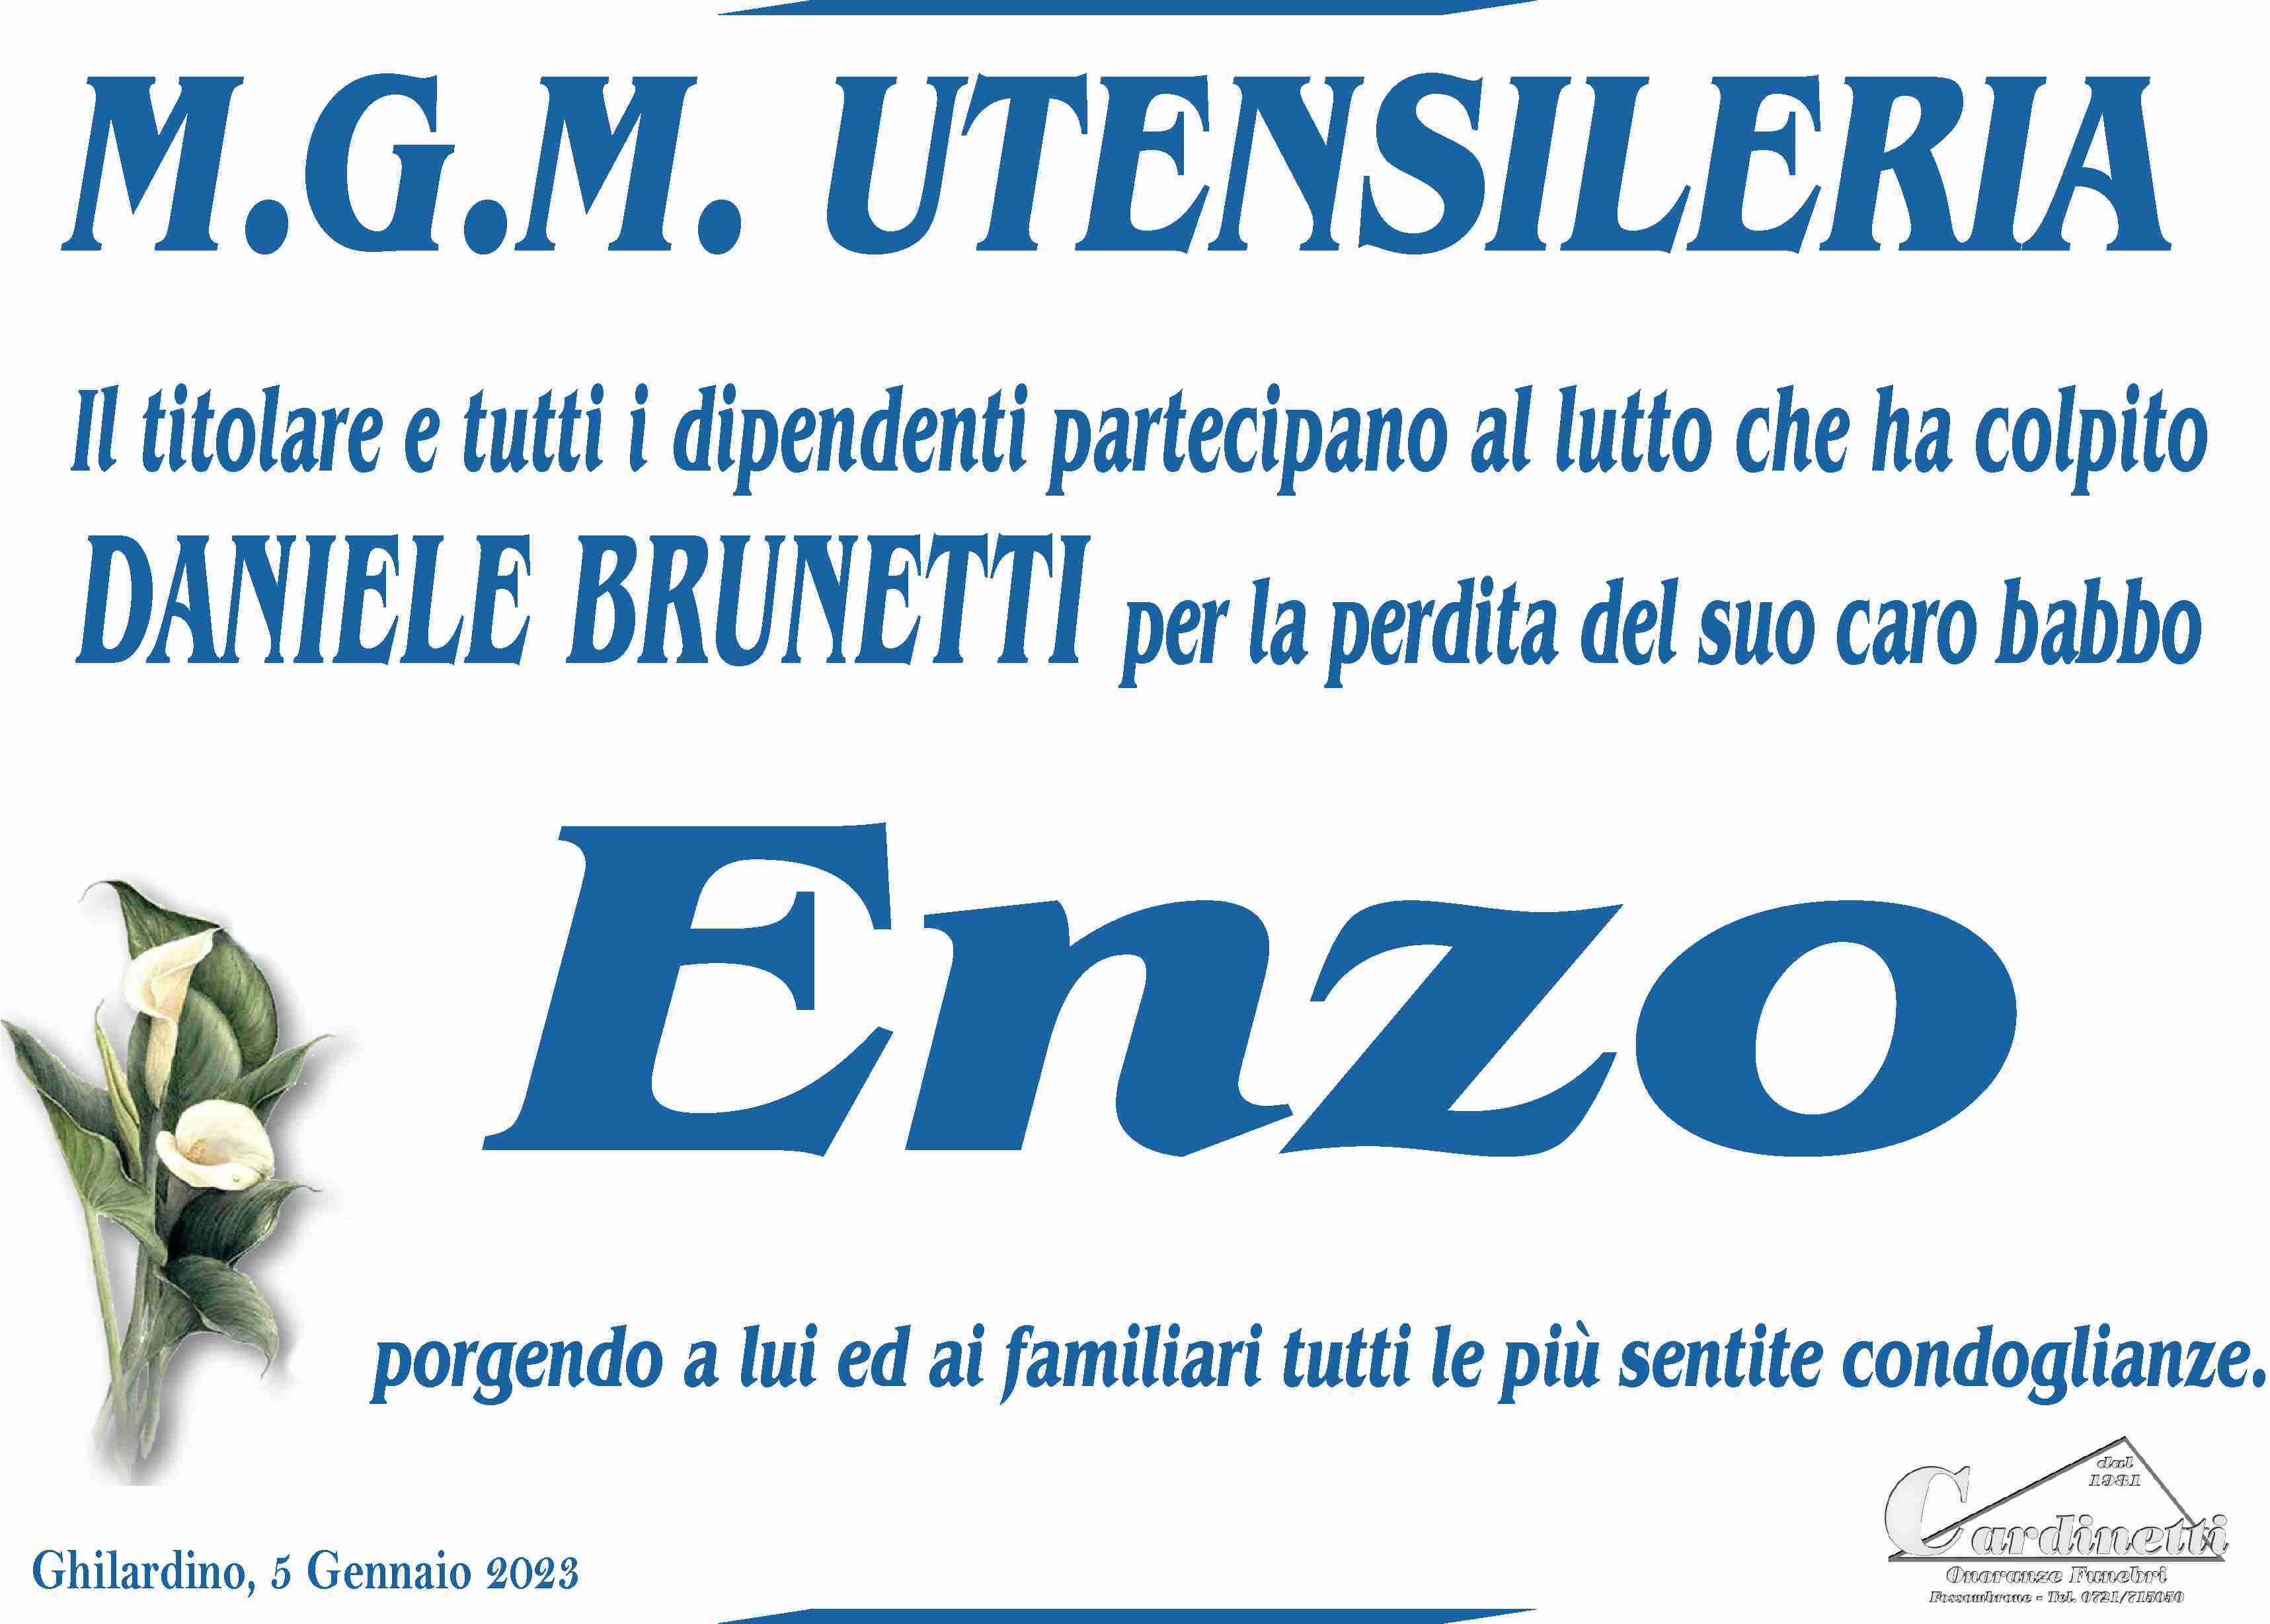 Enzo Brunetti